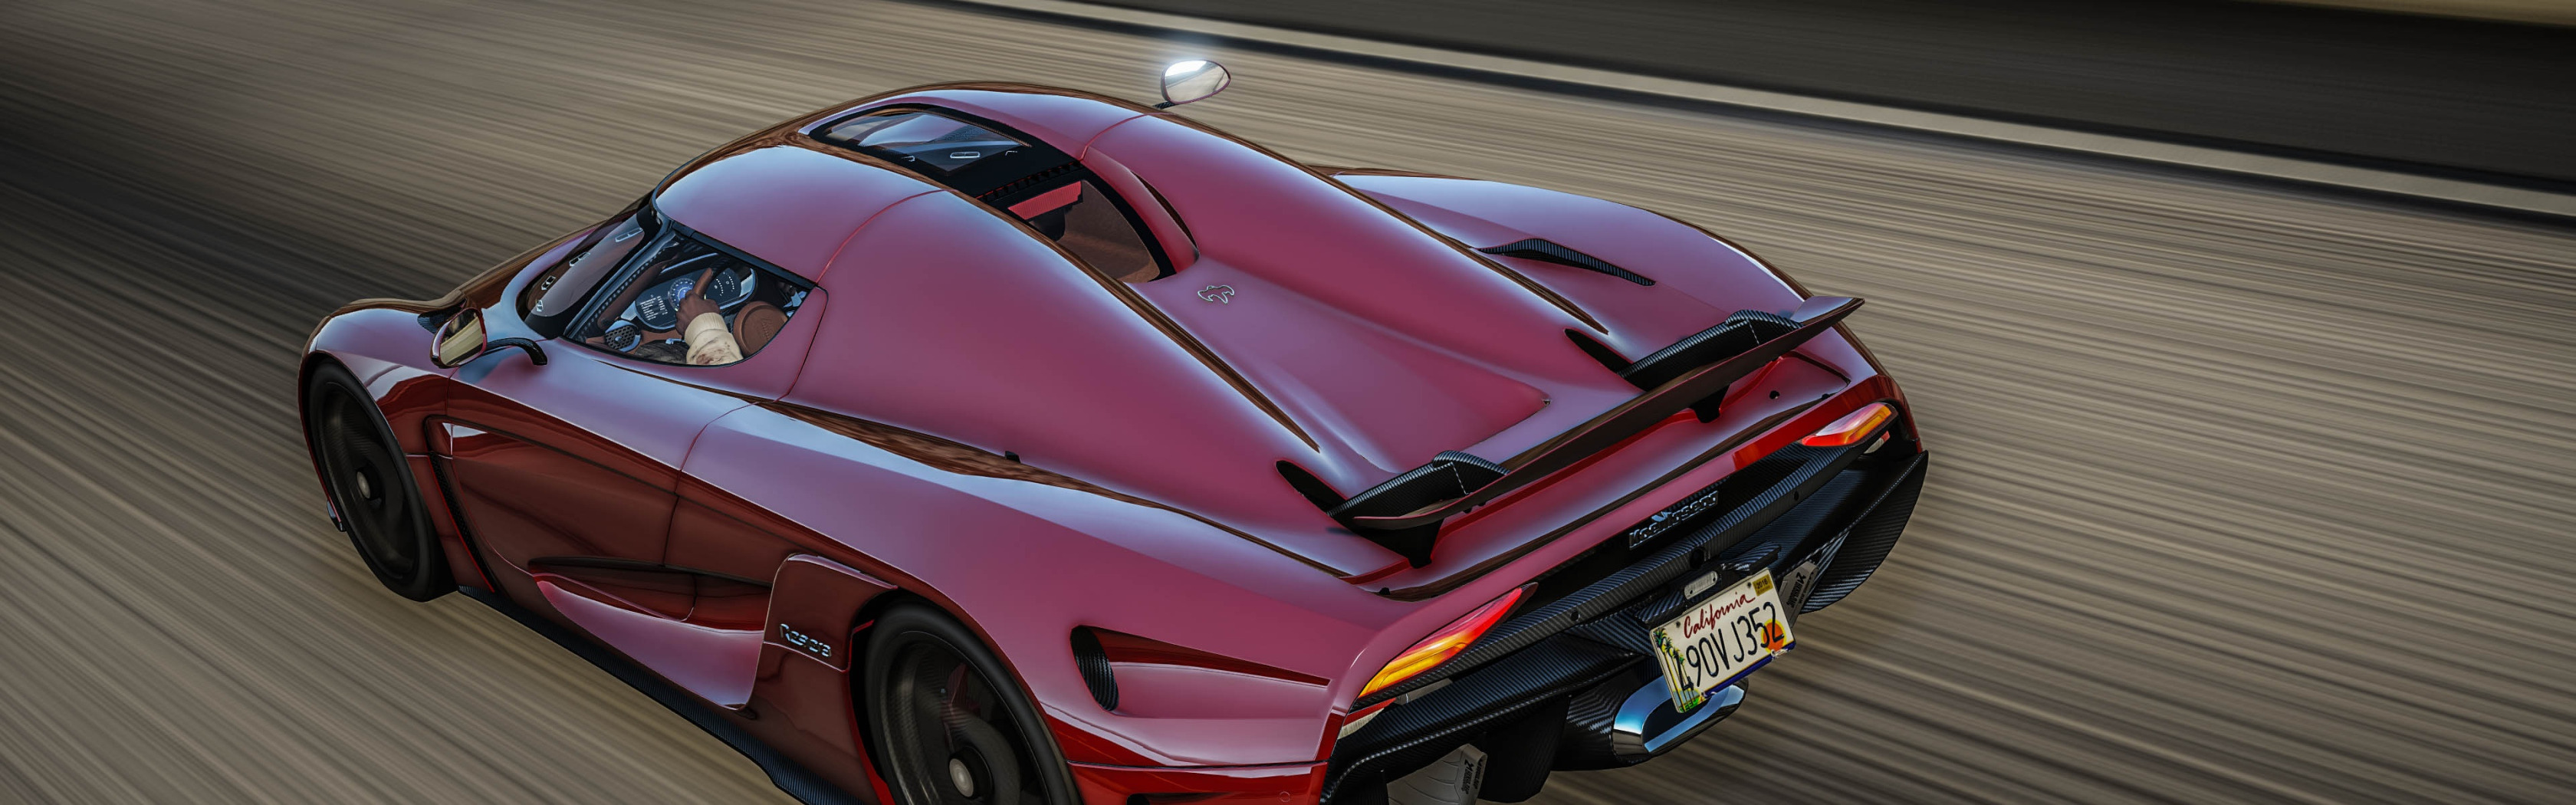 Koenigsegg regera gta 5 фото 51